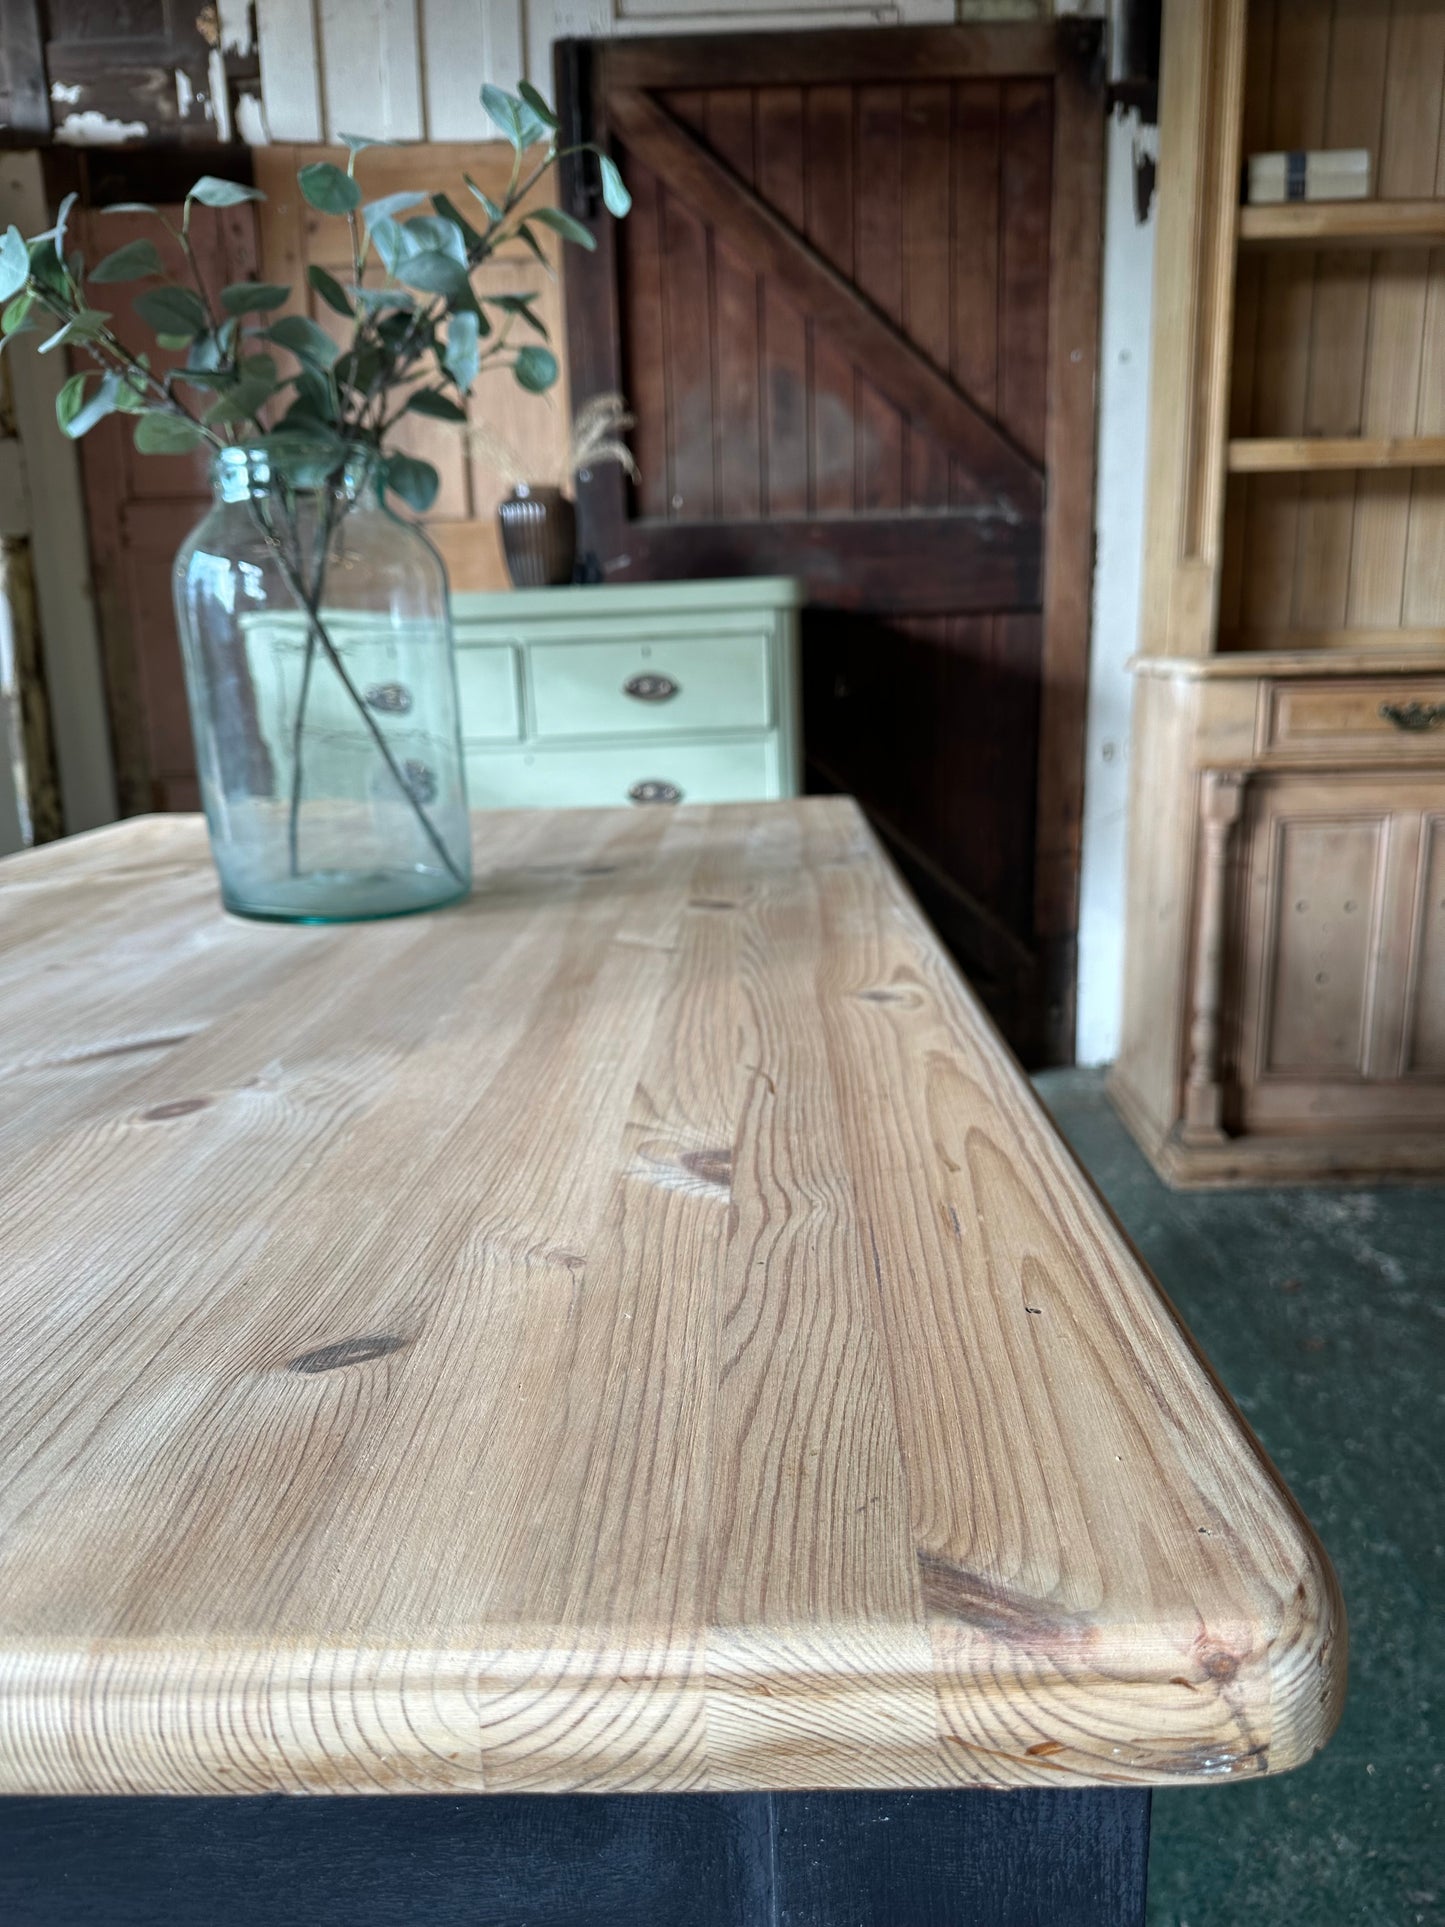 Rustic farmhouse table 6 seater